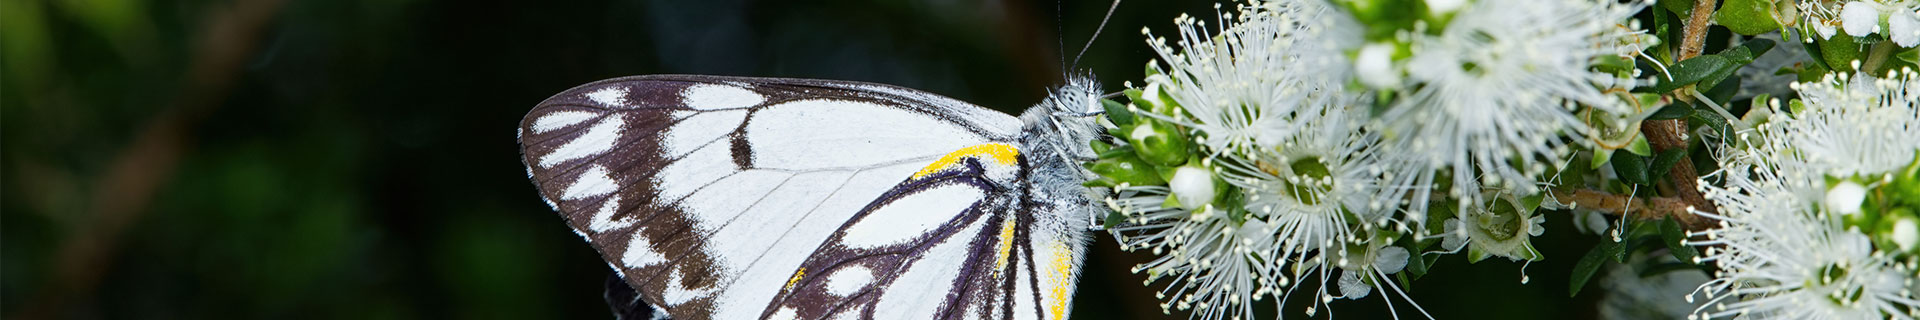 <p>How to attract birds & butterflies to your garden</p>
